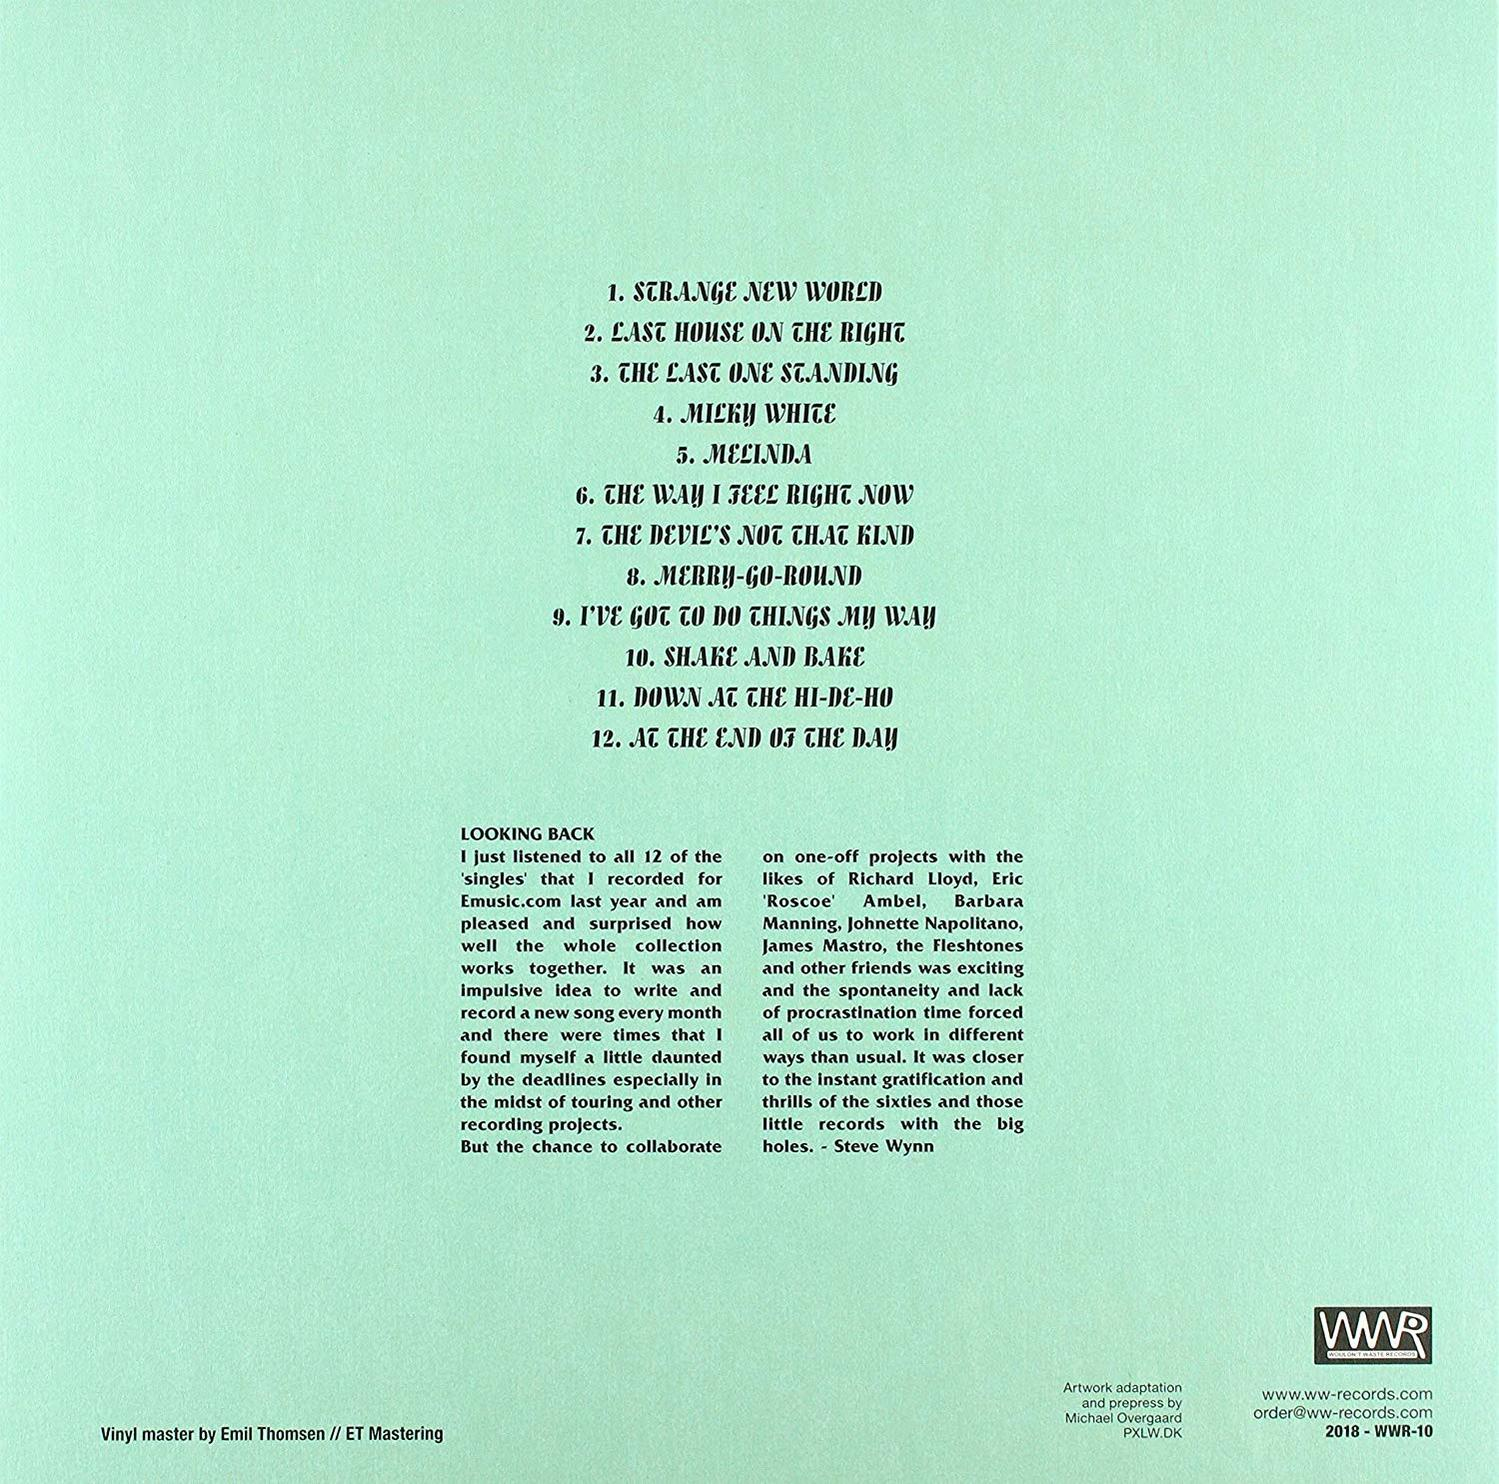 Steve Wynn - singles emusic - the collection (Vinyl)